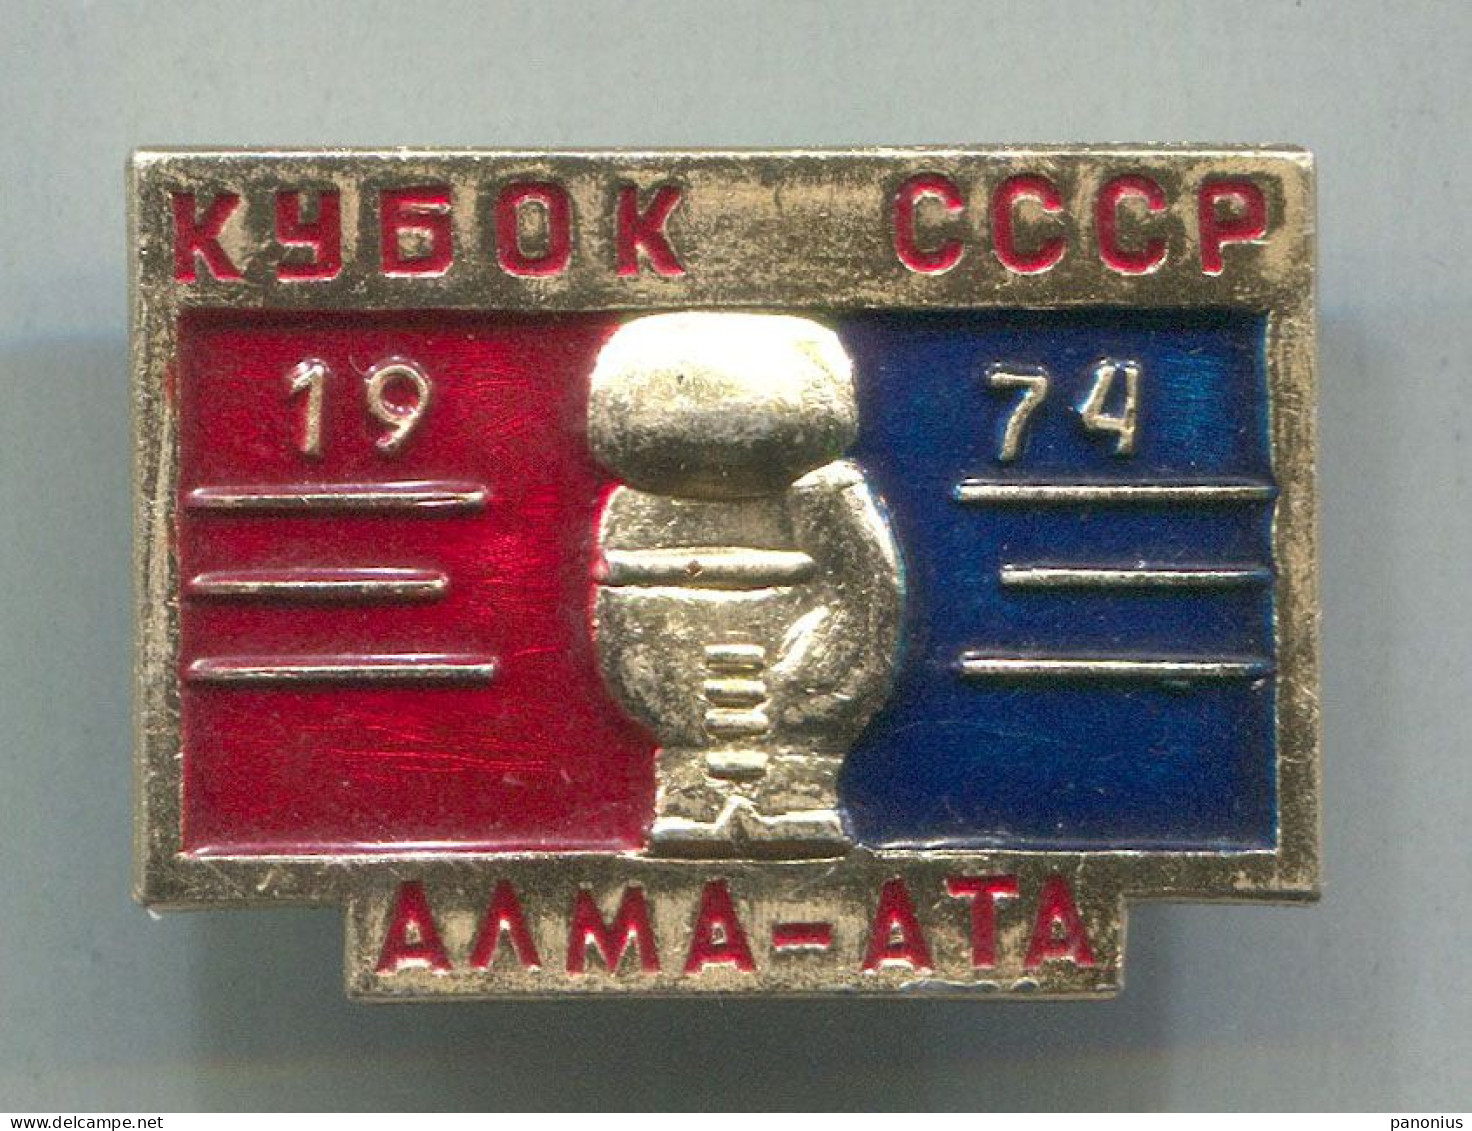 Boxing Box Boxen Pugilato - Alma - Ata Kazakhstan 1974. USSR Russia, Vintage  Pin  Badge  Abzeichen - Boxeo